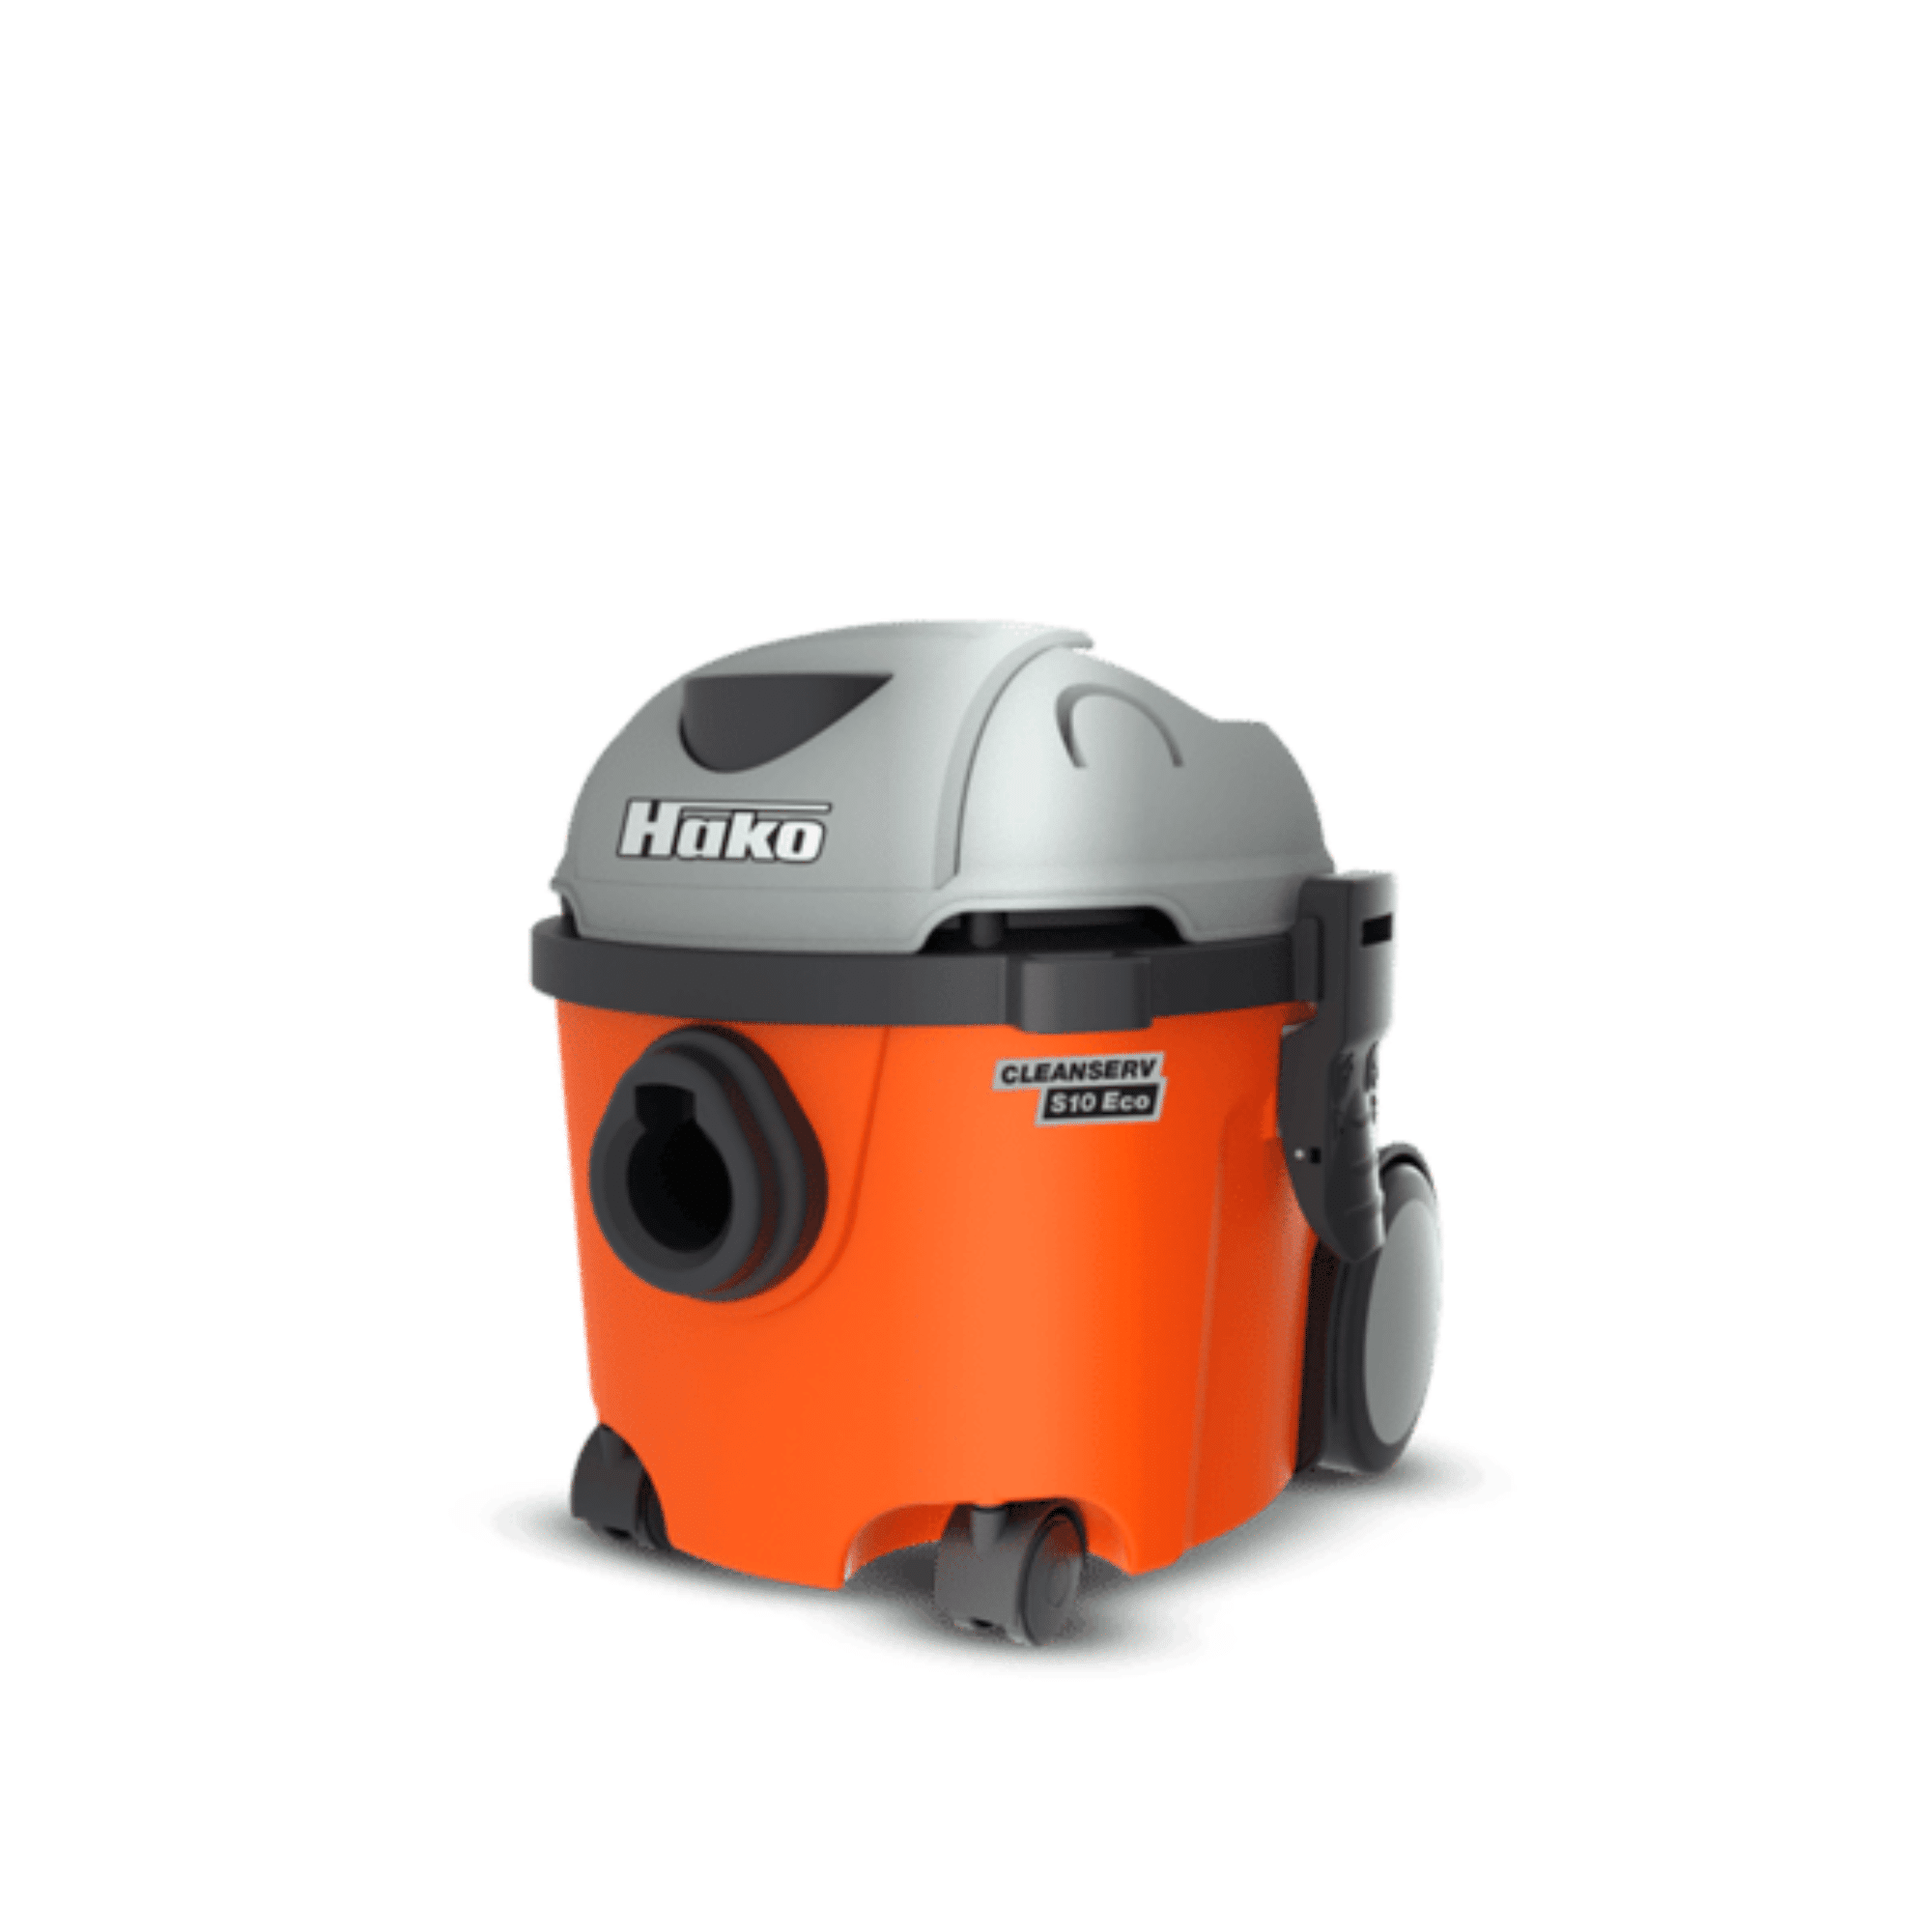 Cleanserv S10 Eco Dry Vacuum Cleaner